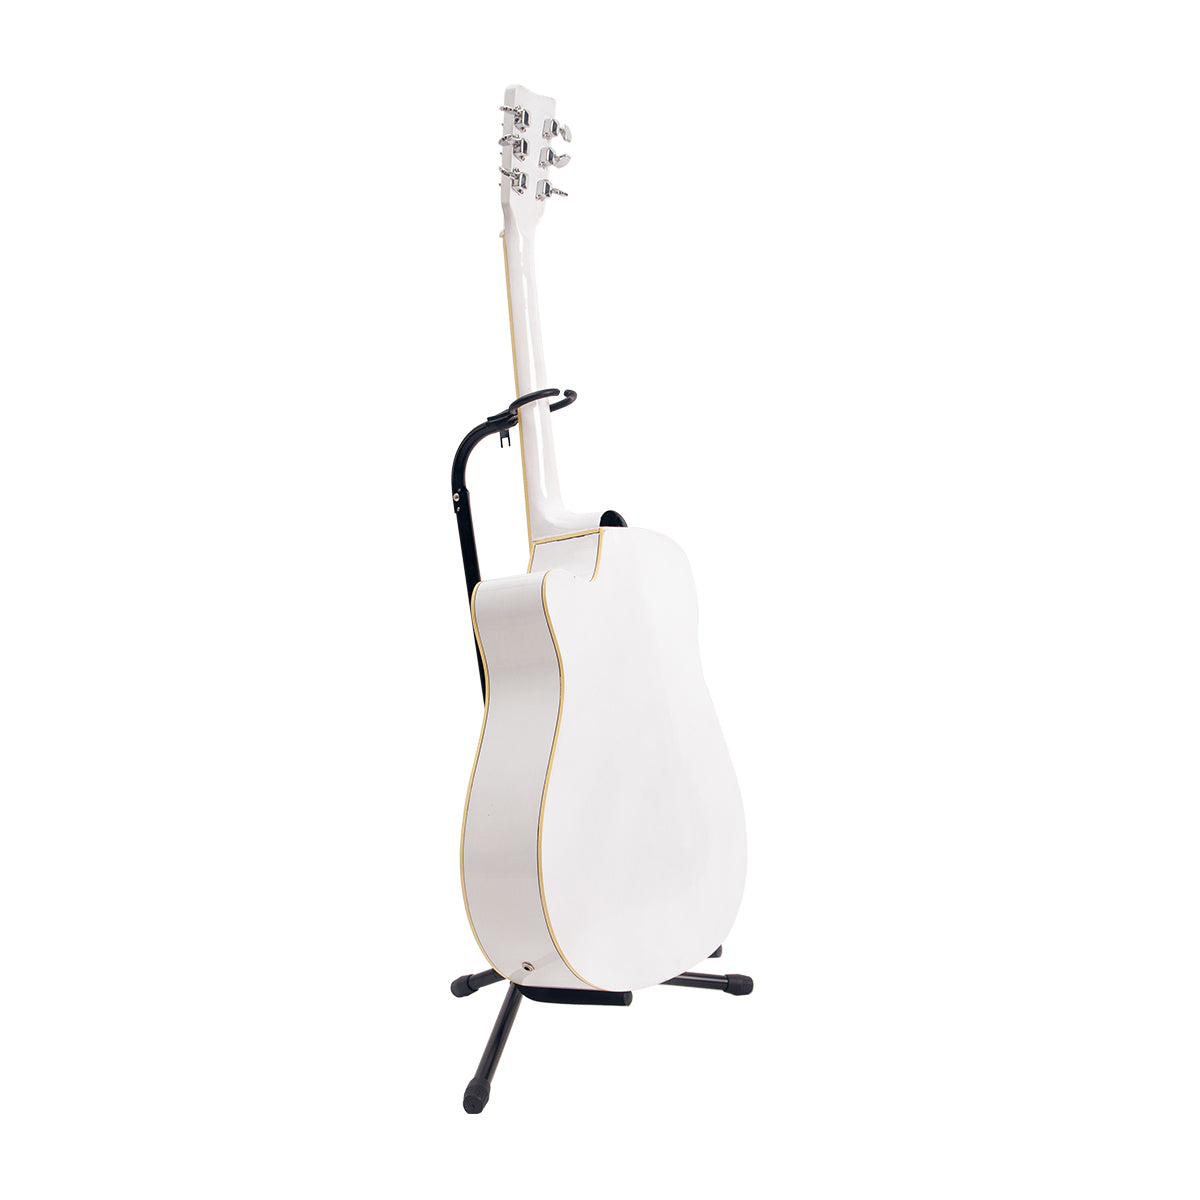 gitar semi akustik white/putih mandalika jw-01 wh eq7545r